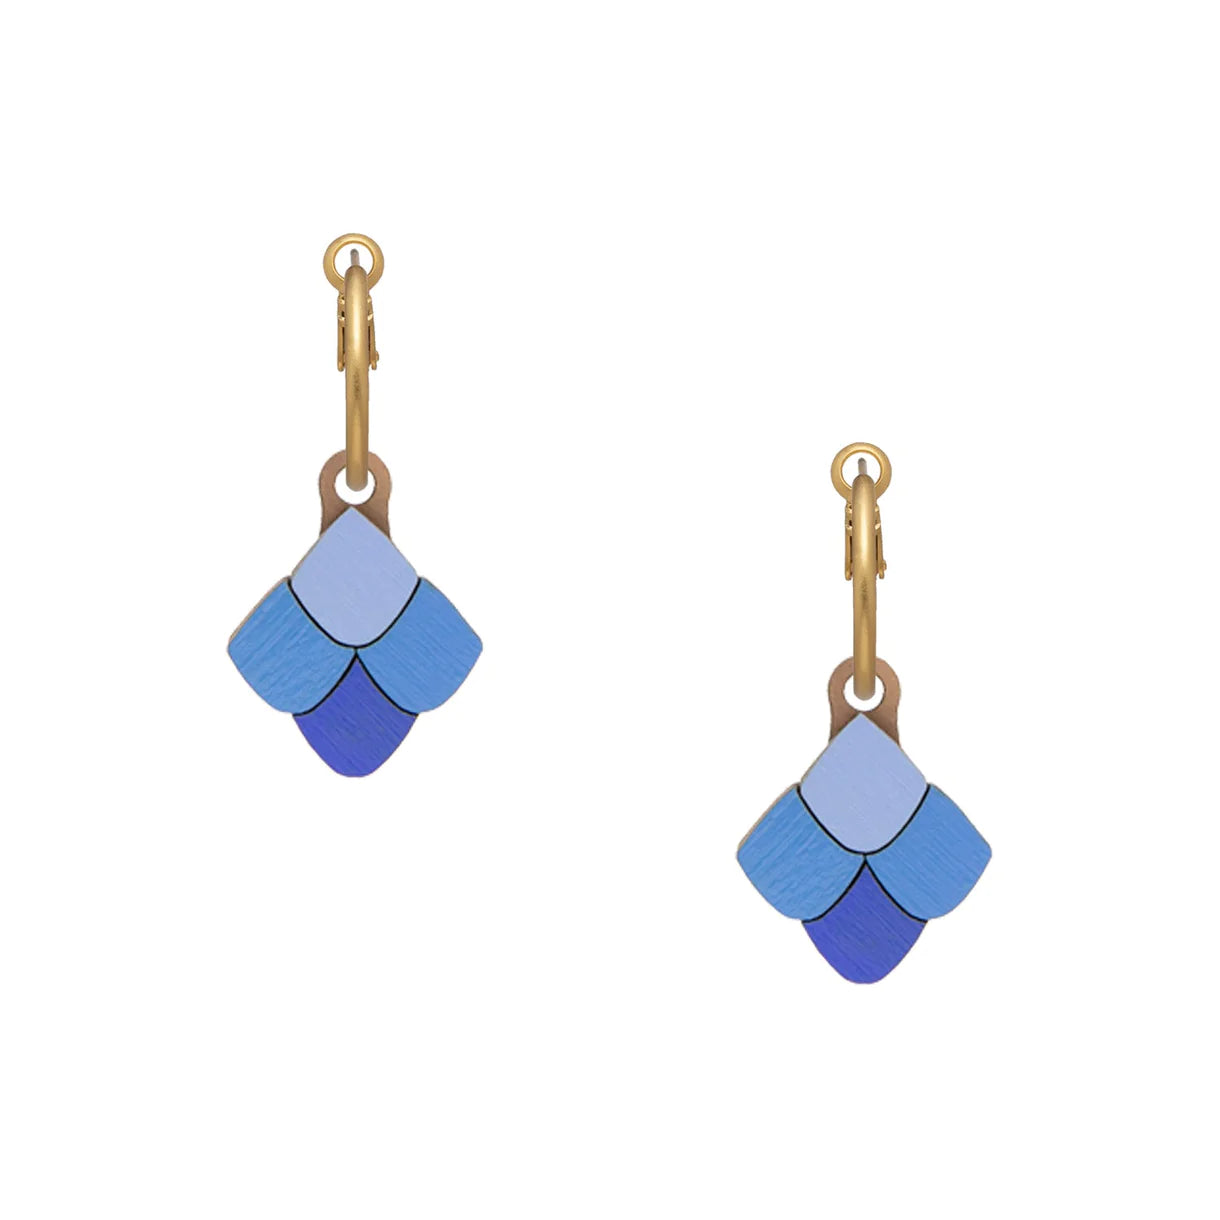 Blue Gaudi Scales Earrings - The Nancy Smillie Shop - Art, Jewellery & Designer Gifts Glasgow